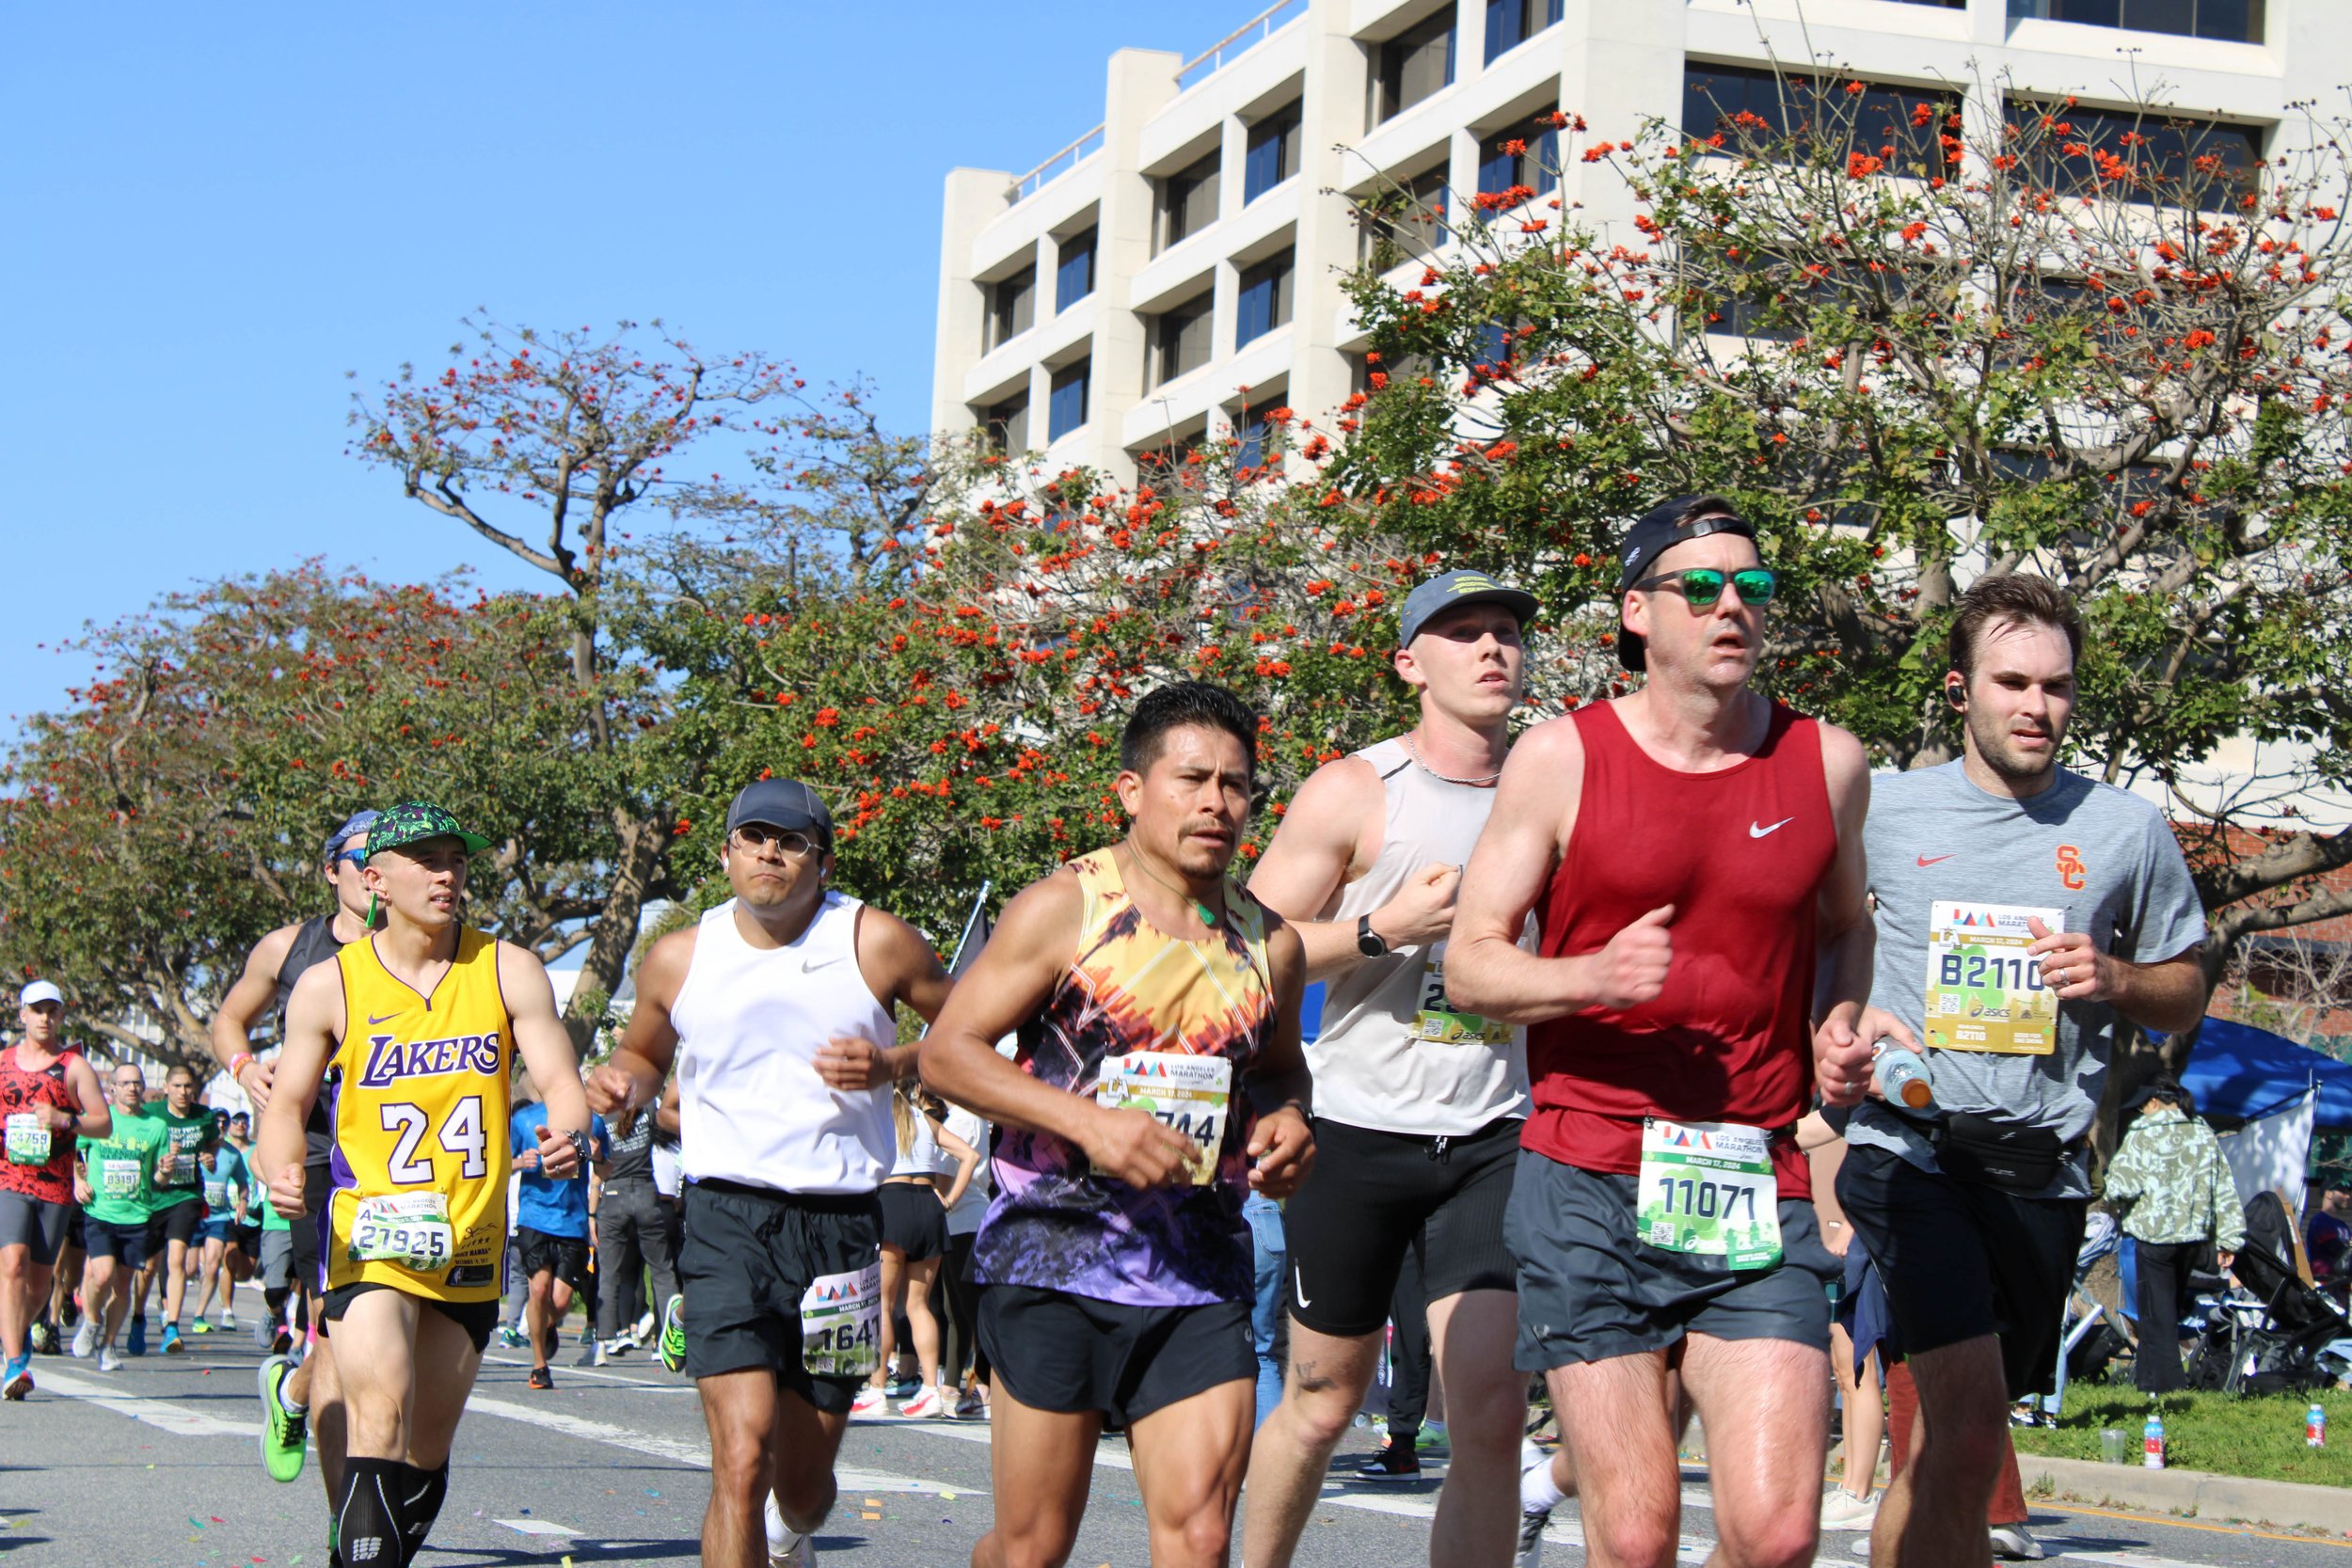  Runners (Julian Carson - right) (Carlo Batungbacal - left) make homestretch on Sunset Boulevard as Los Angeles Marathon nears end 